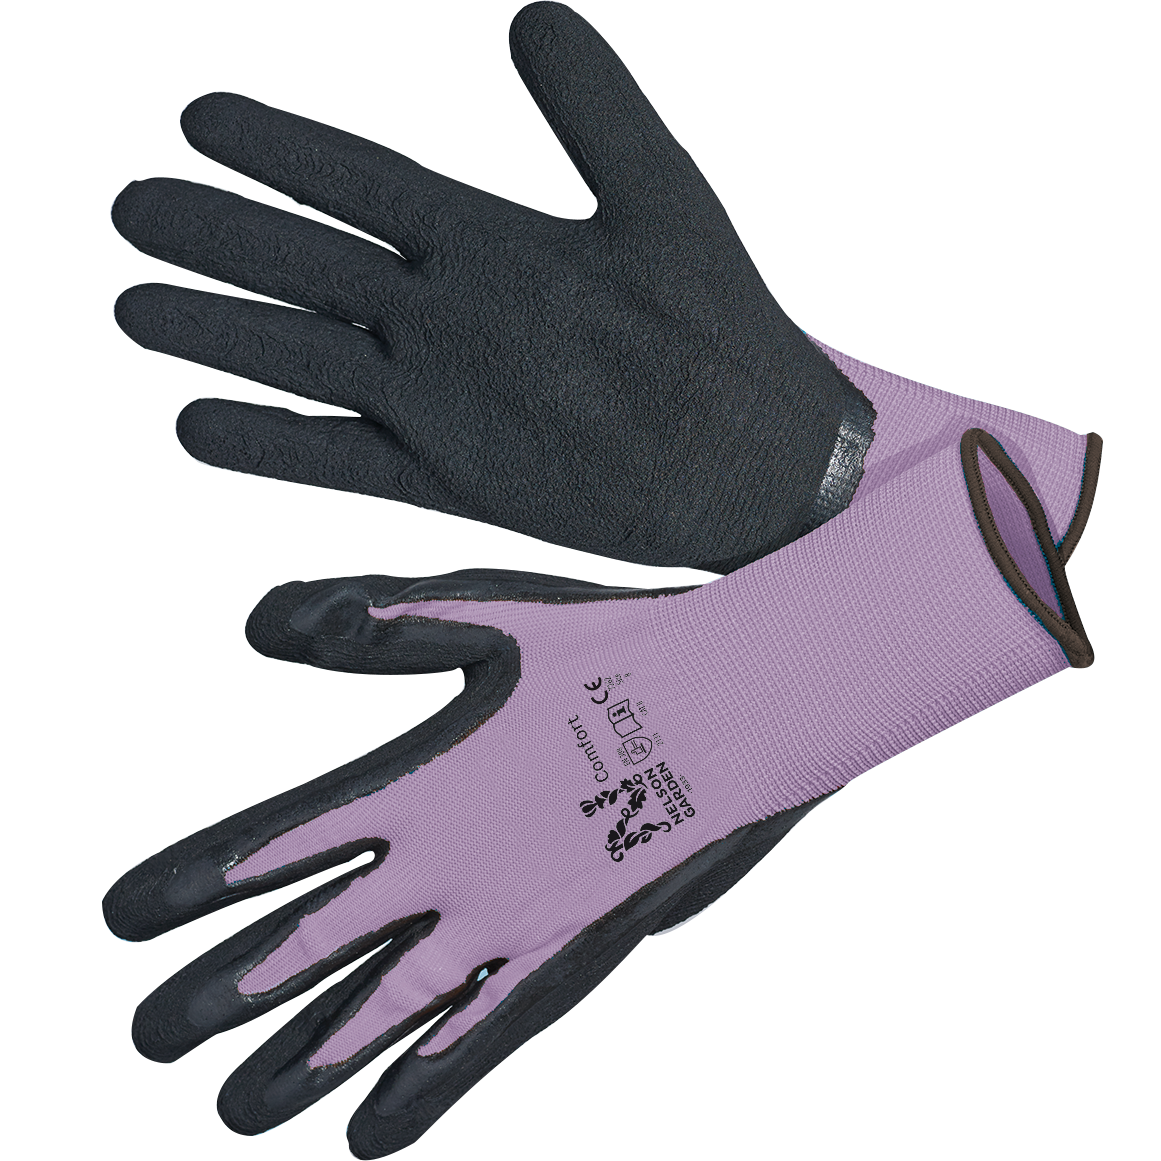 handske-comfort-violett-svart-stl-8-1